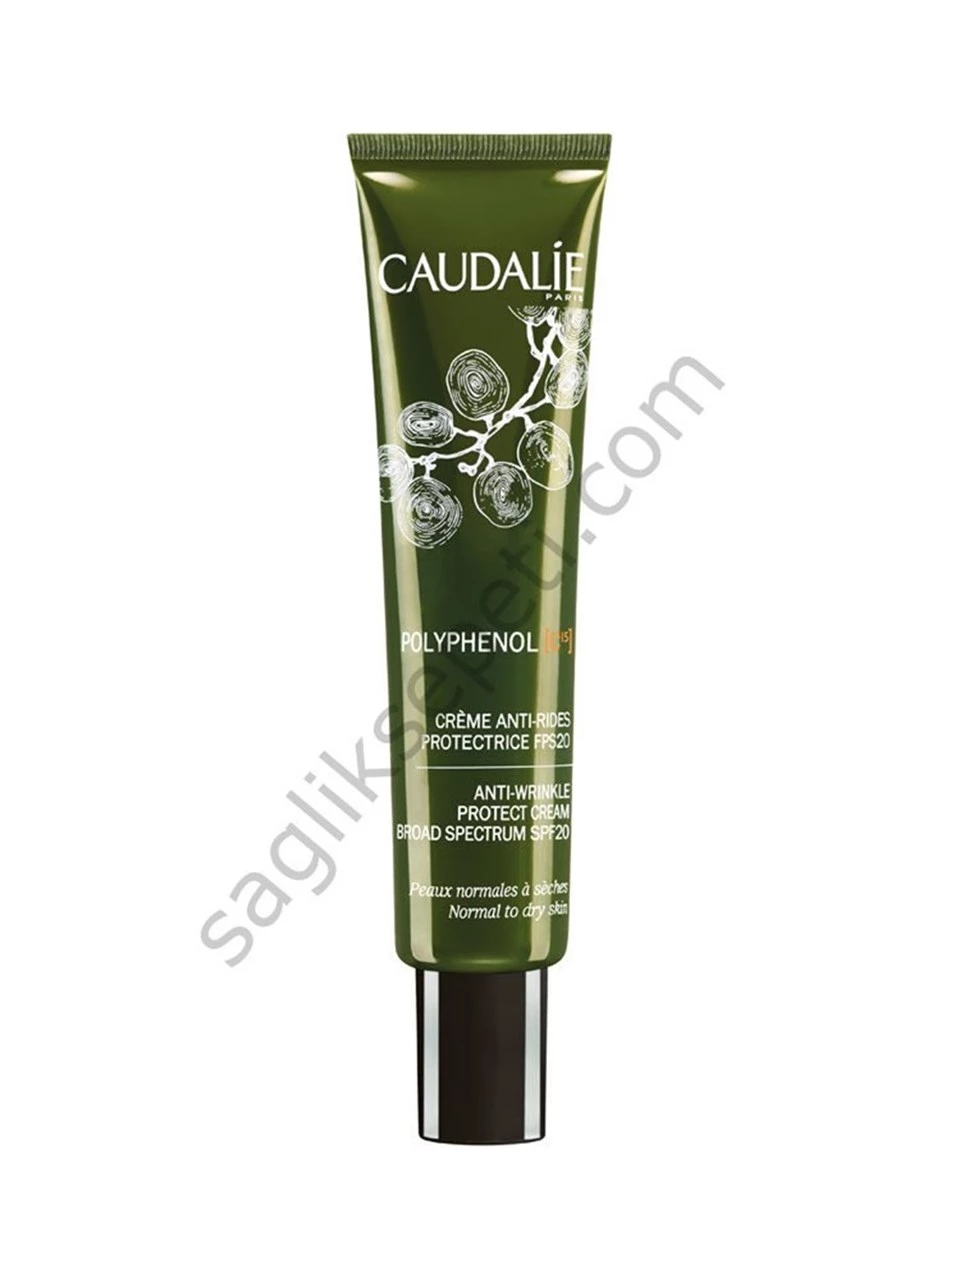 Caudalie Polyphenol C15 Anti Wrinkle Protect Cream Spf20 40ml